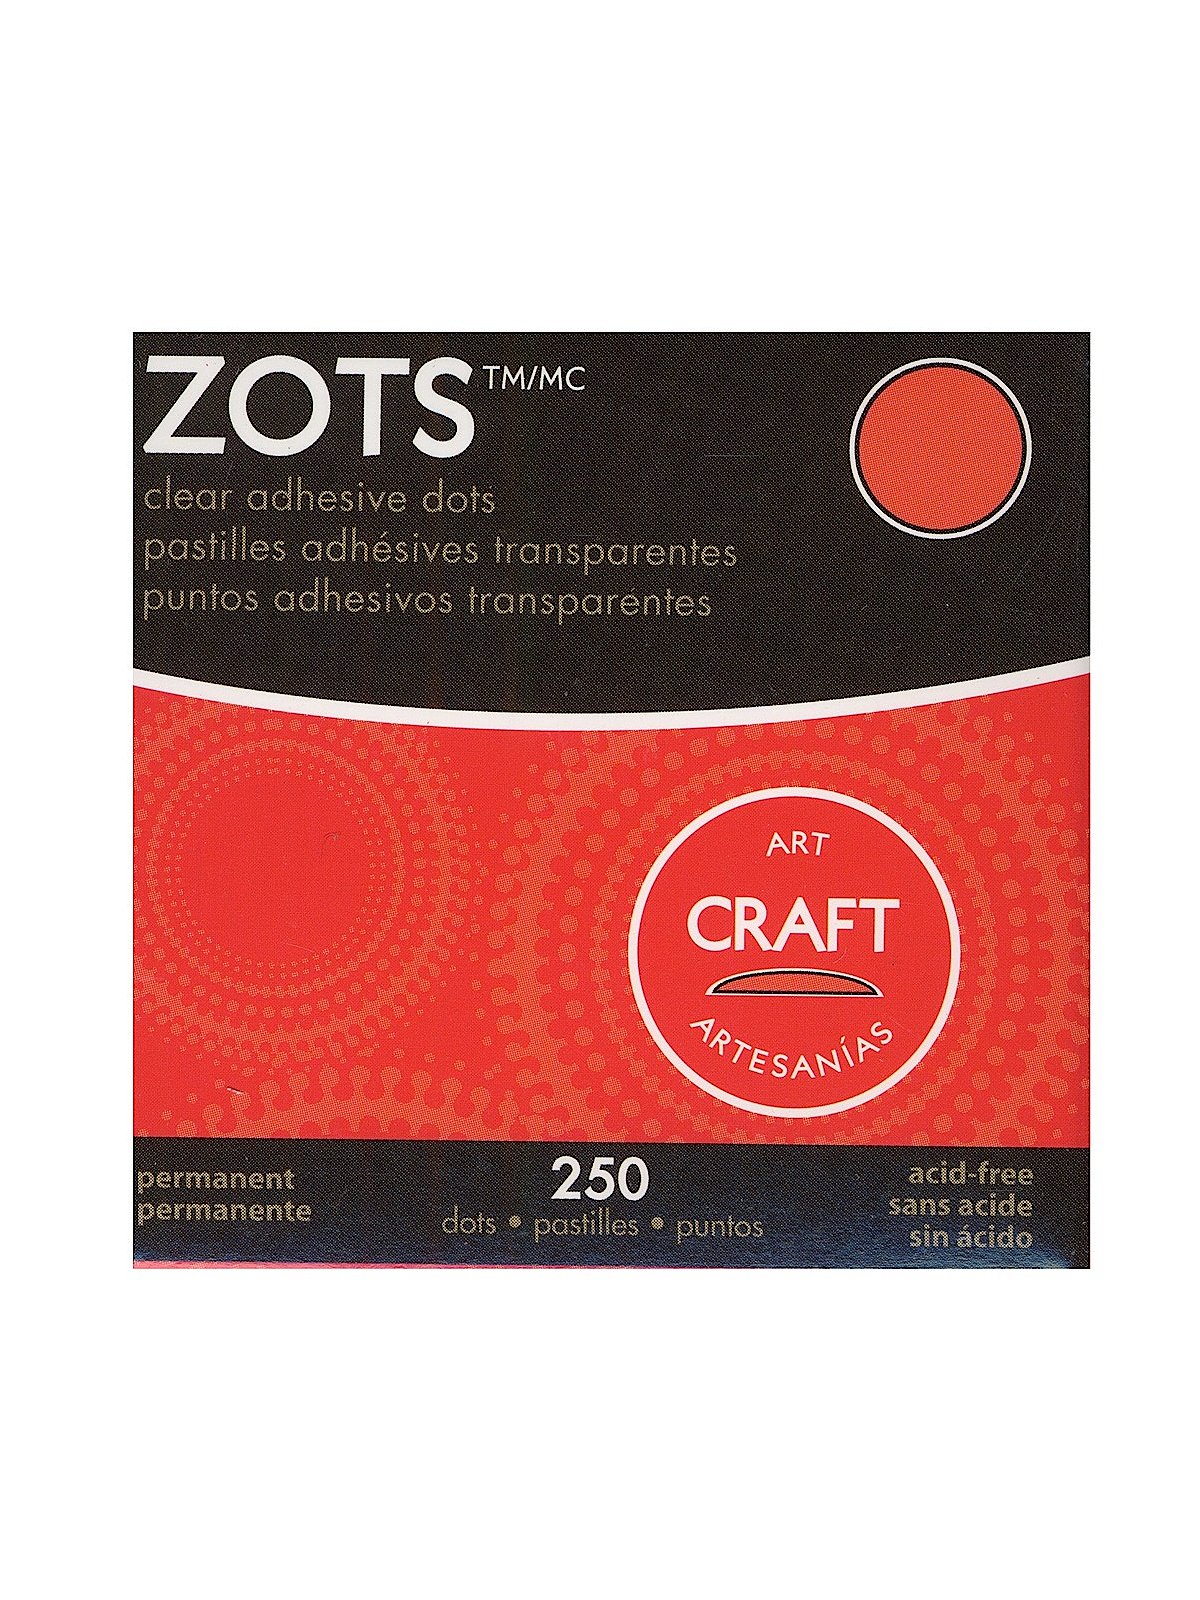 270341 Zots Clear Adhesive Dots Small